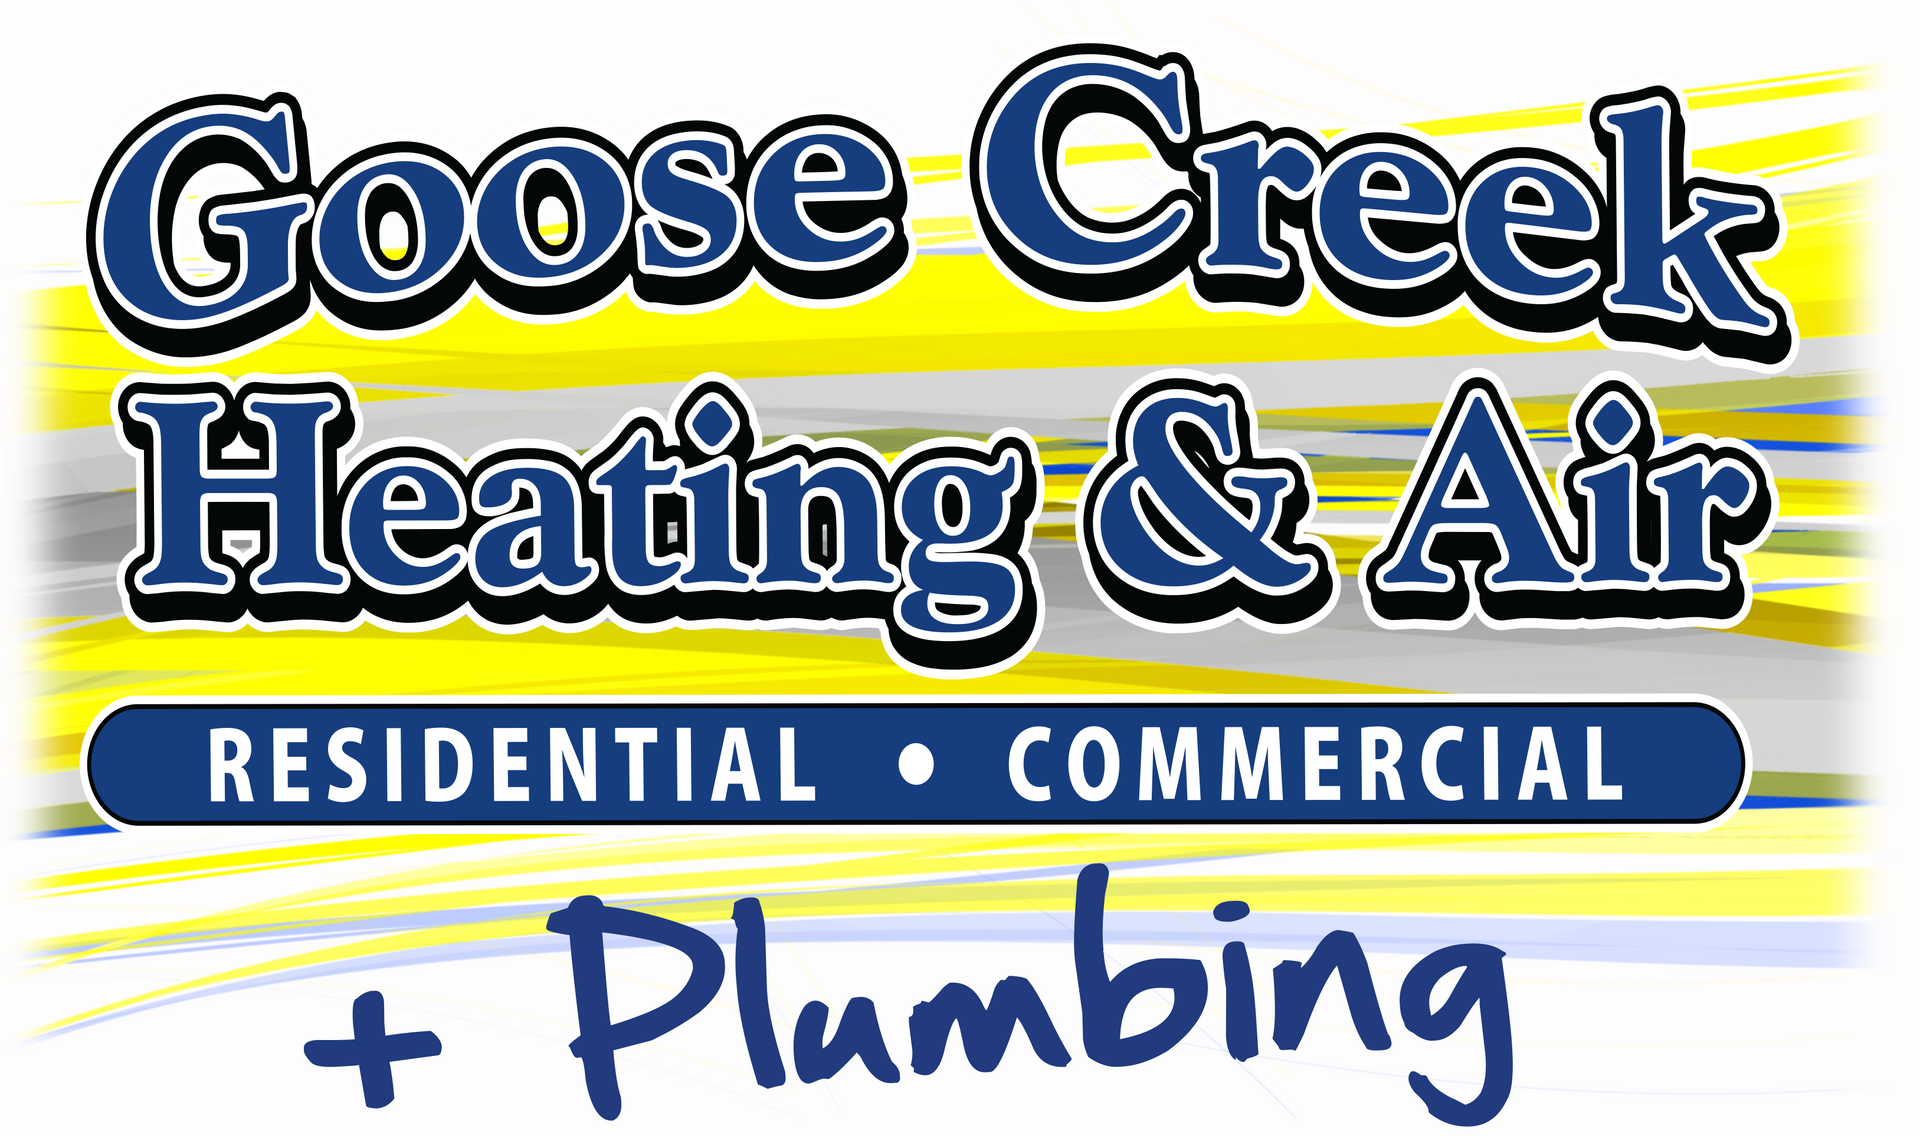 Goose Creek Heating & Air | Charleston, SC HVAC Service